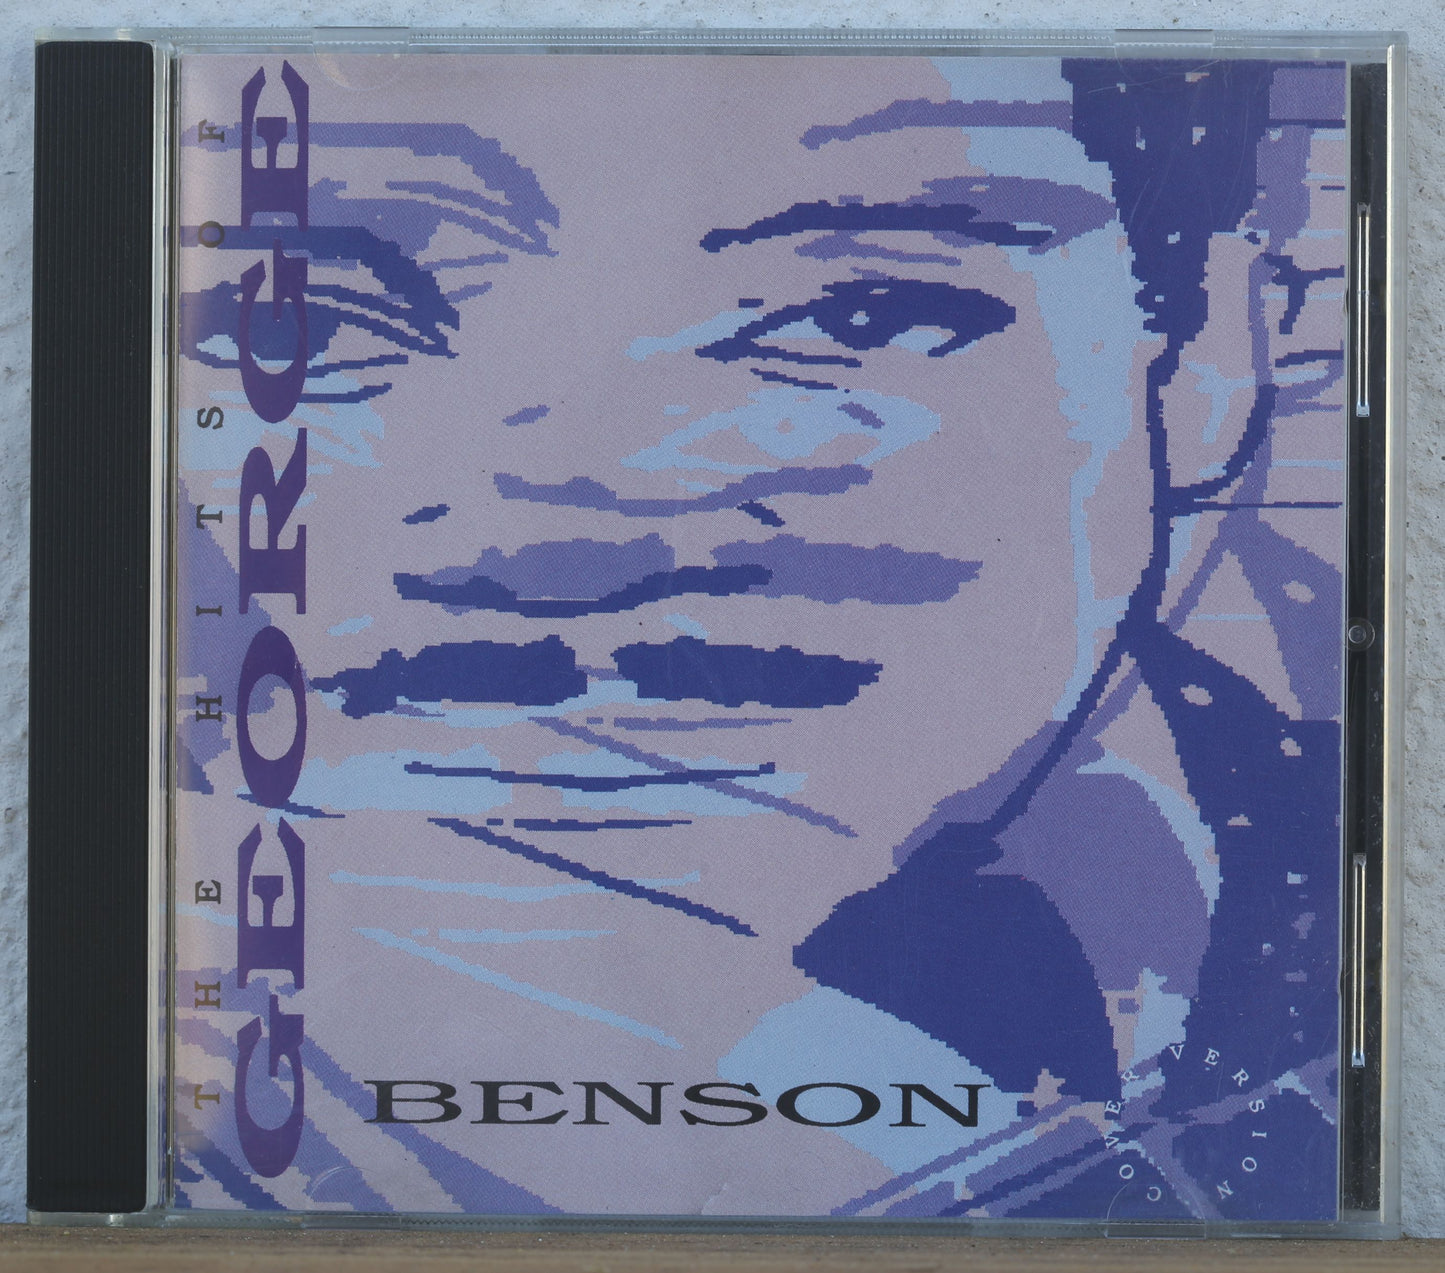 George Benson - The hits of George Benson (cd)